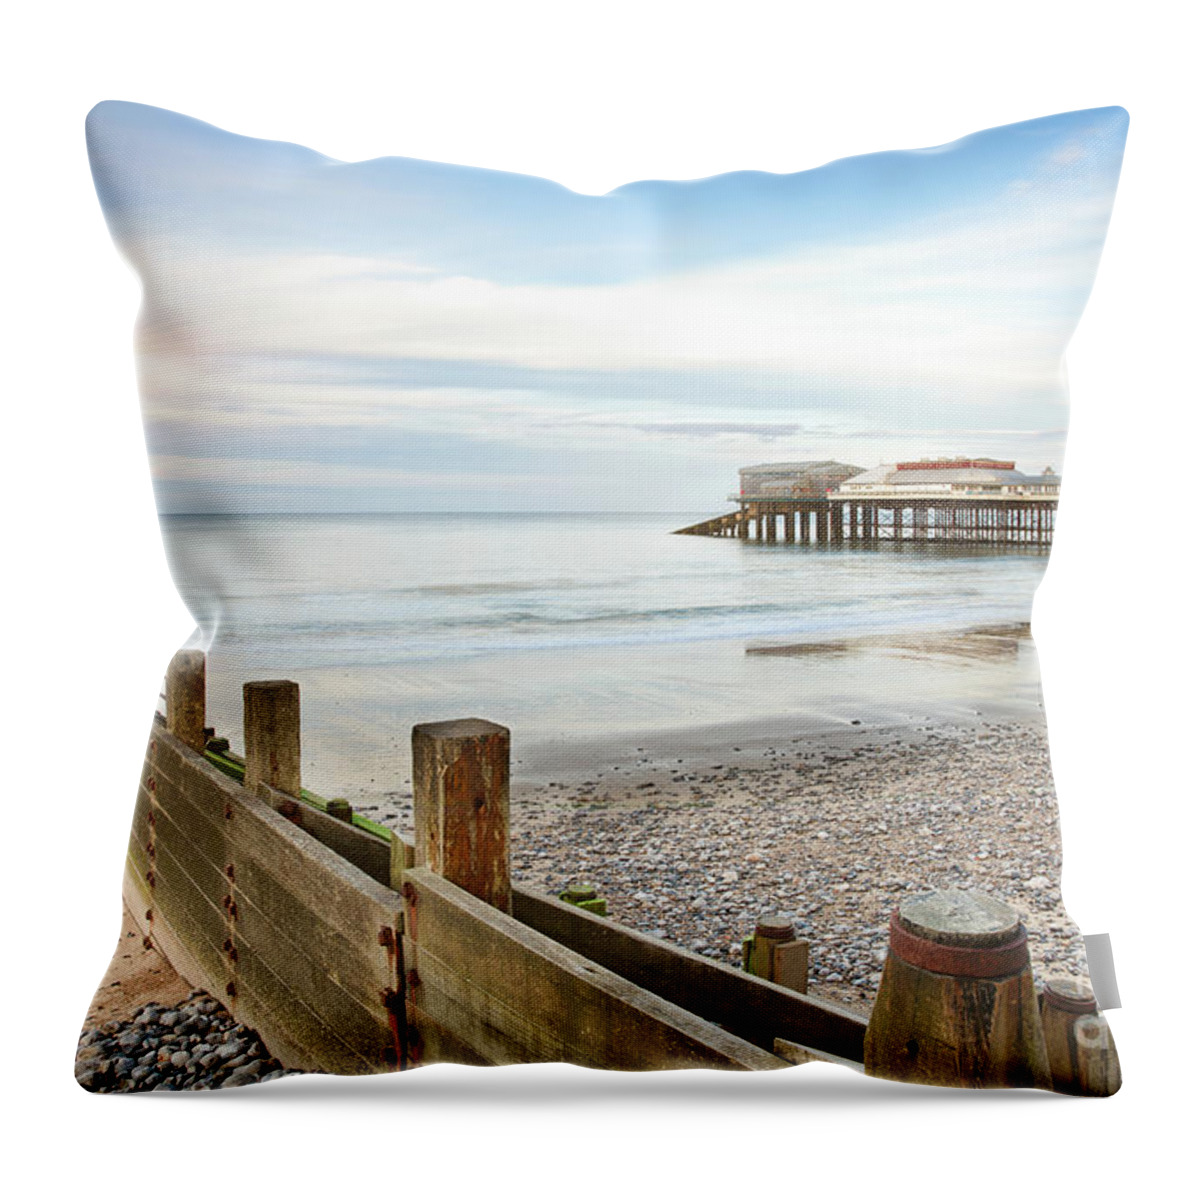 Cromer Throw Pillow featuring the photograph Cromer Pier in Norfolk England with beach groin by Simon Bratt